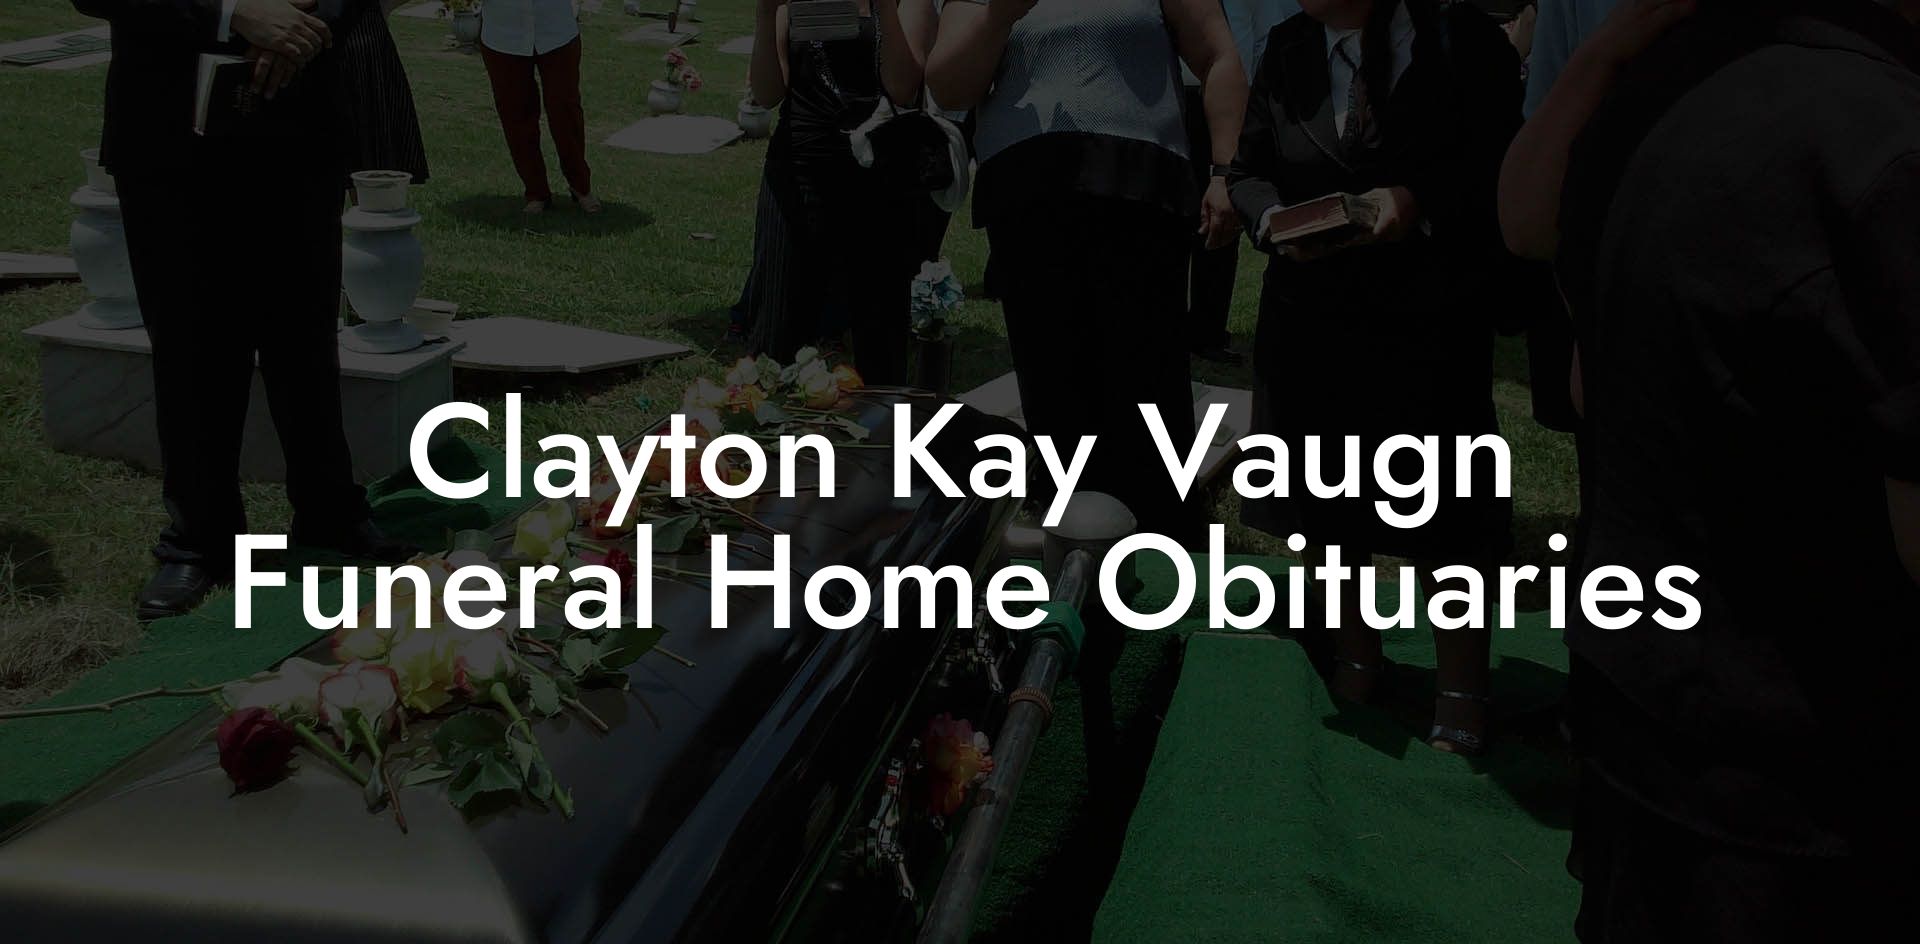 Clayton Kay Vaugn Funeral Home Obituaries